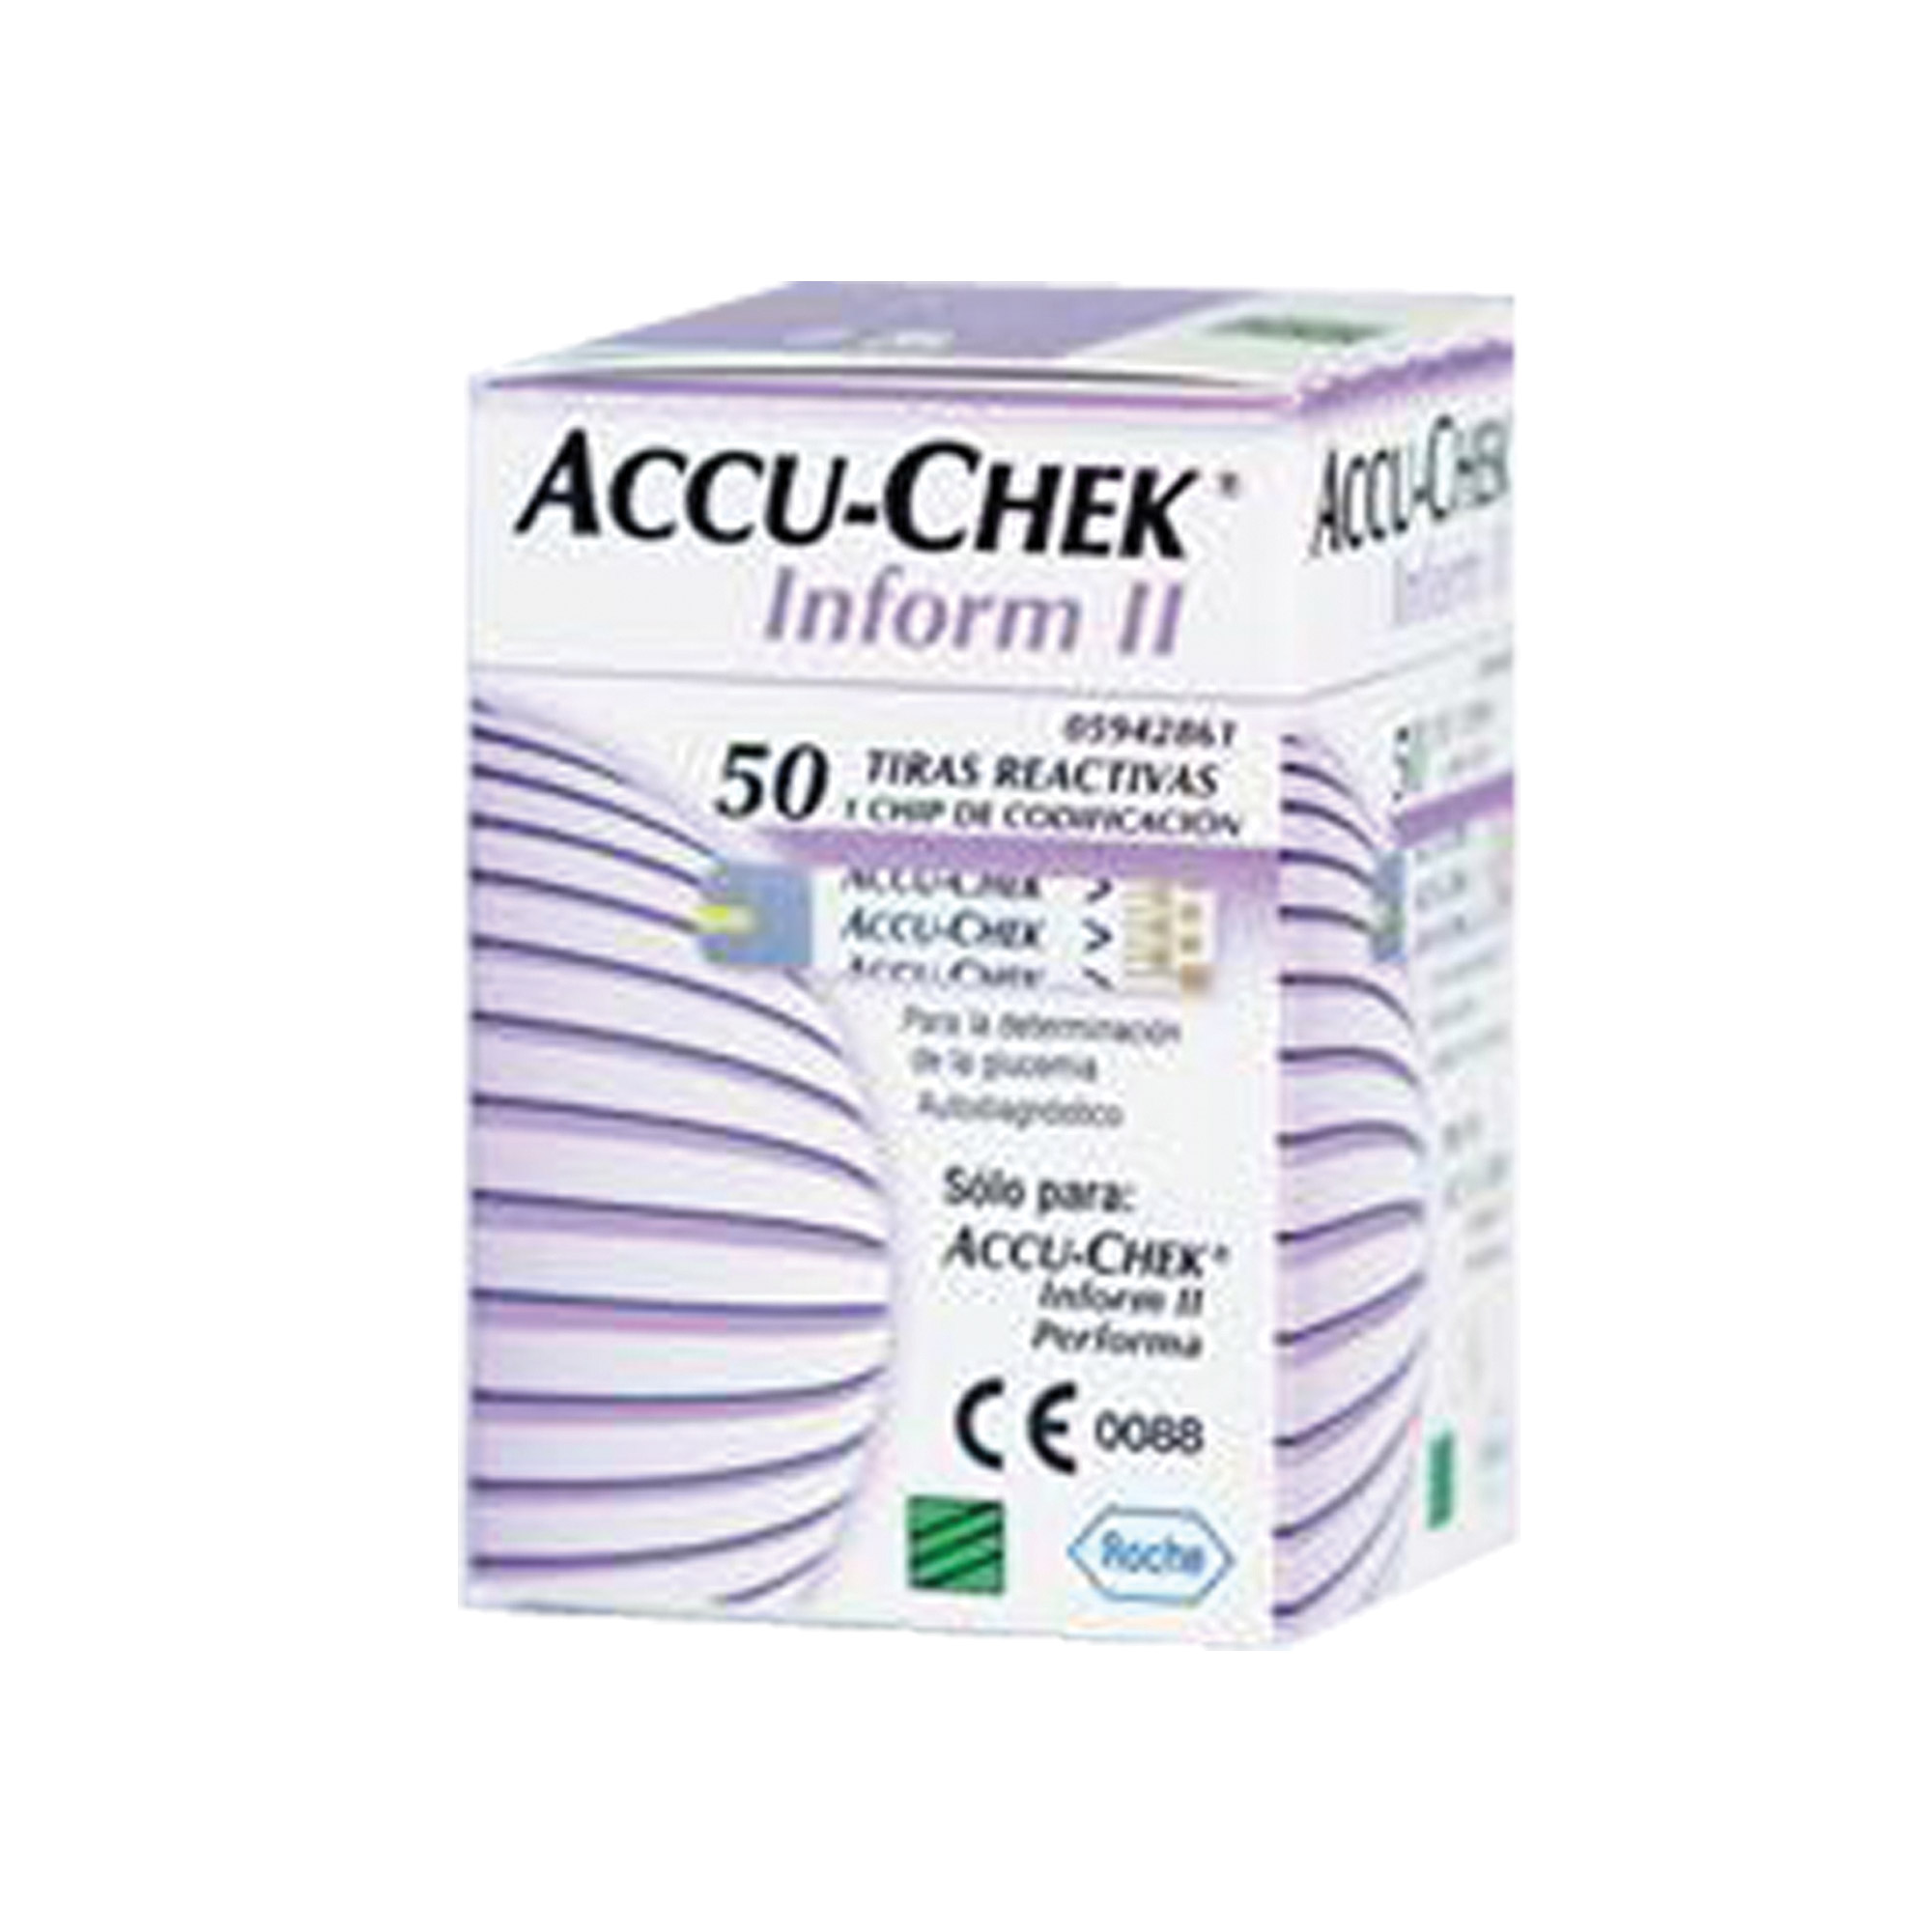 Accu-Chek Inform II & Performa Strips x50 - Each